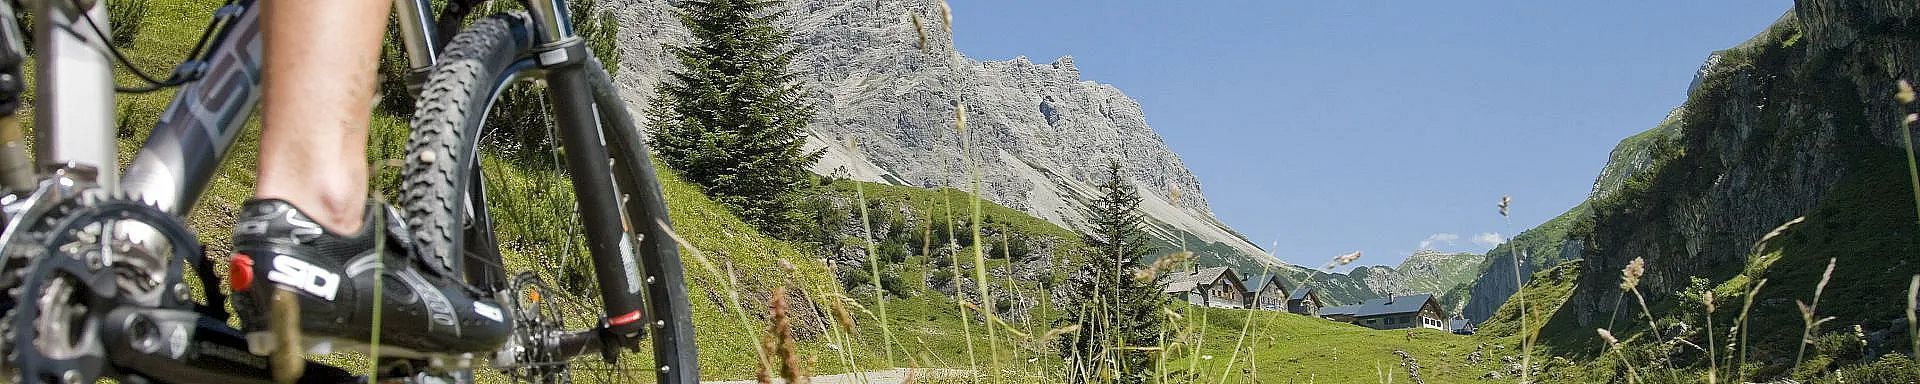 walsertal-sommer-mountainbike-berge